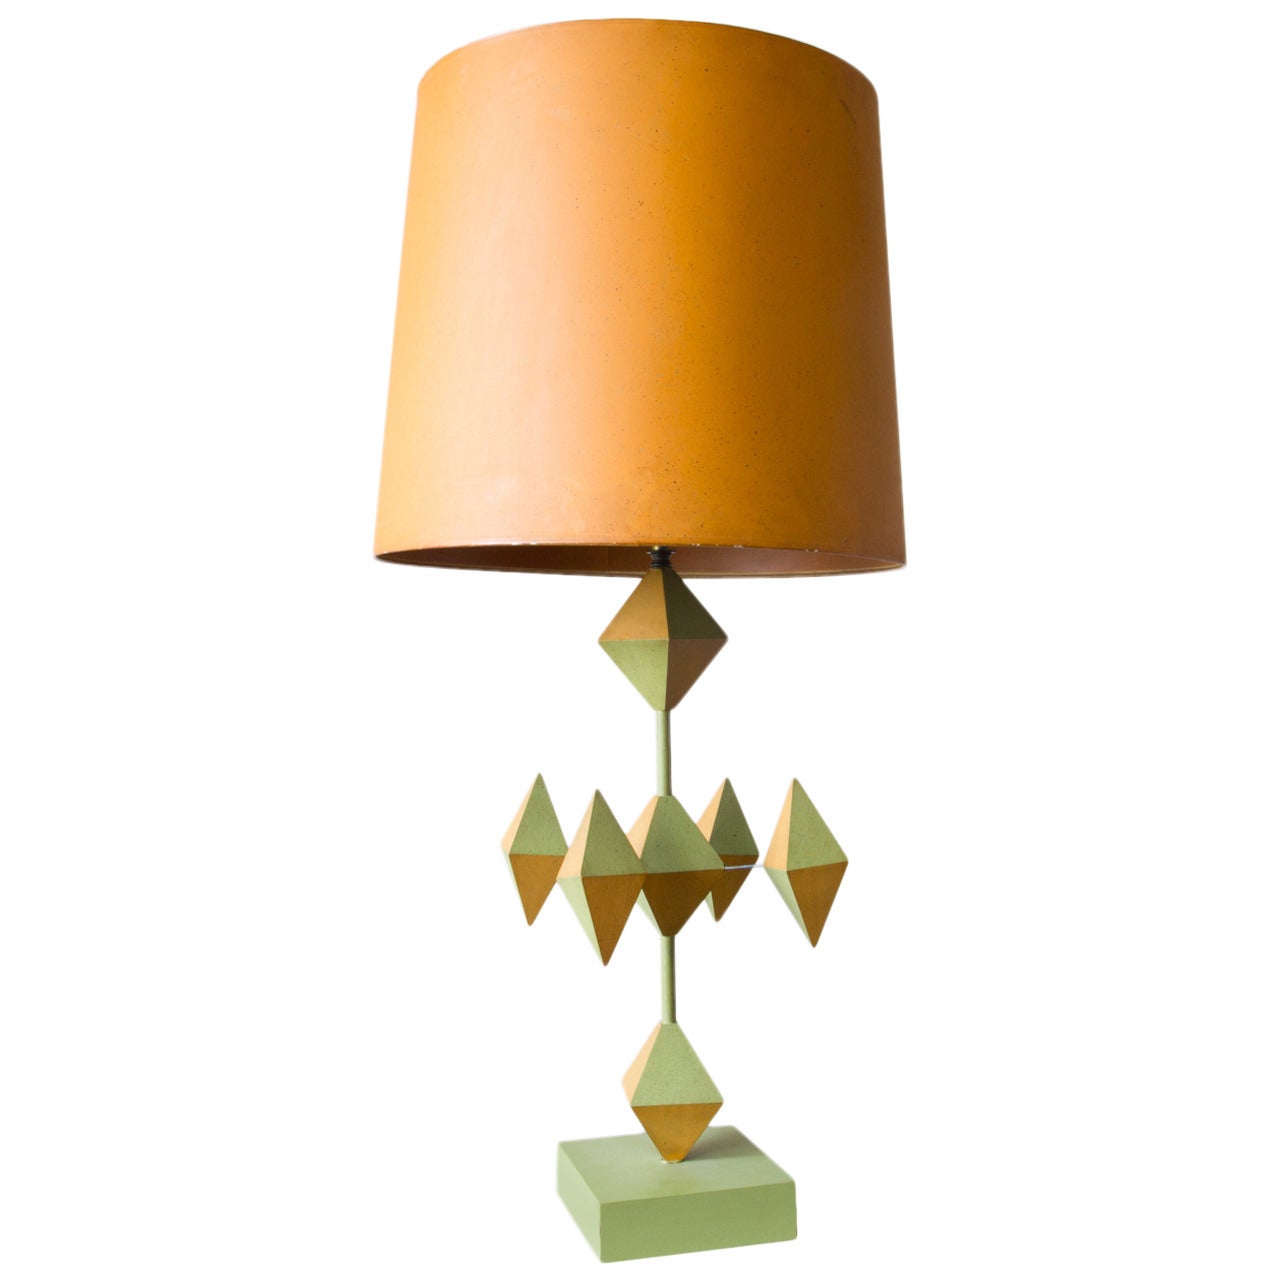 Custom Wooden Op-Art Lamp